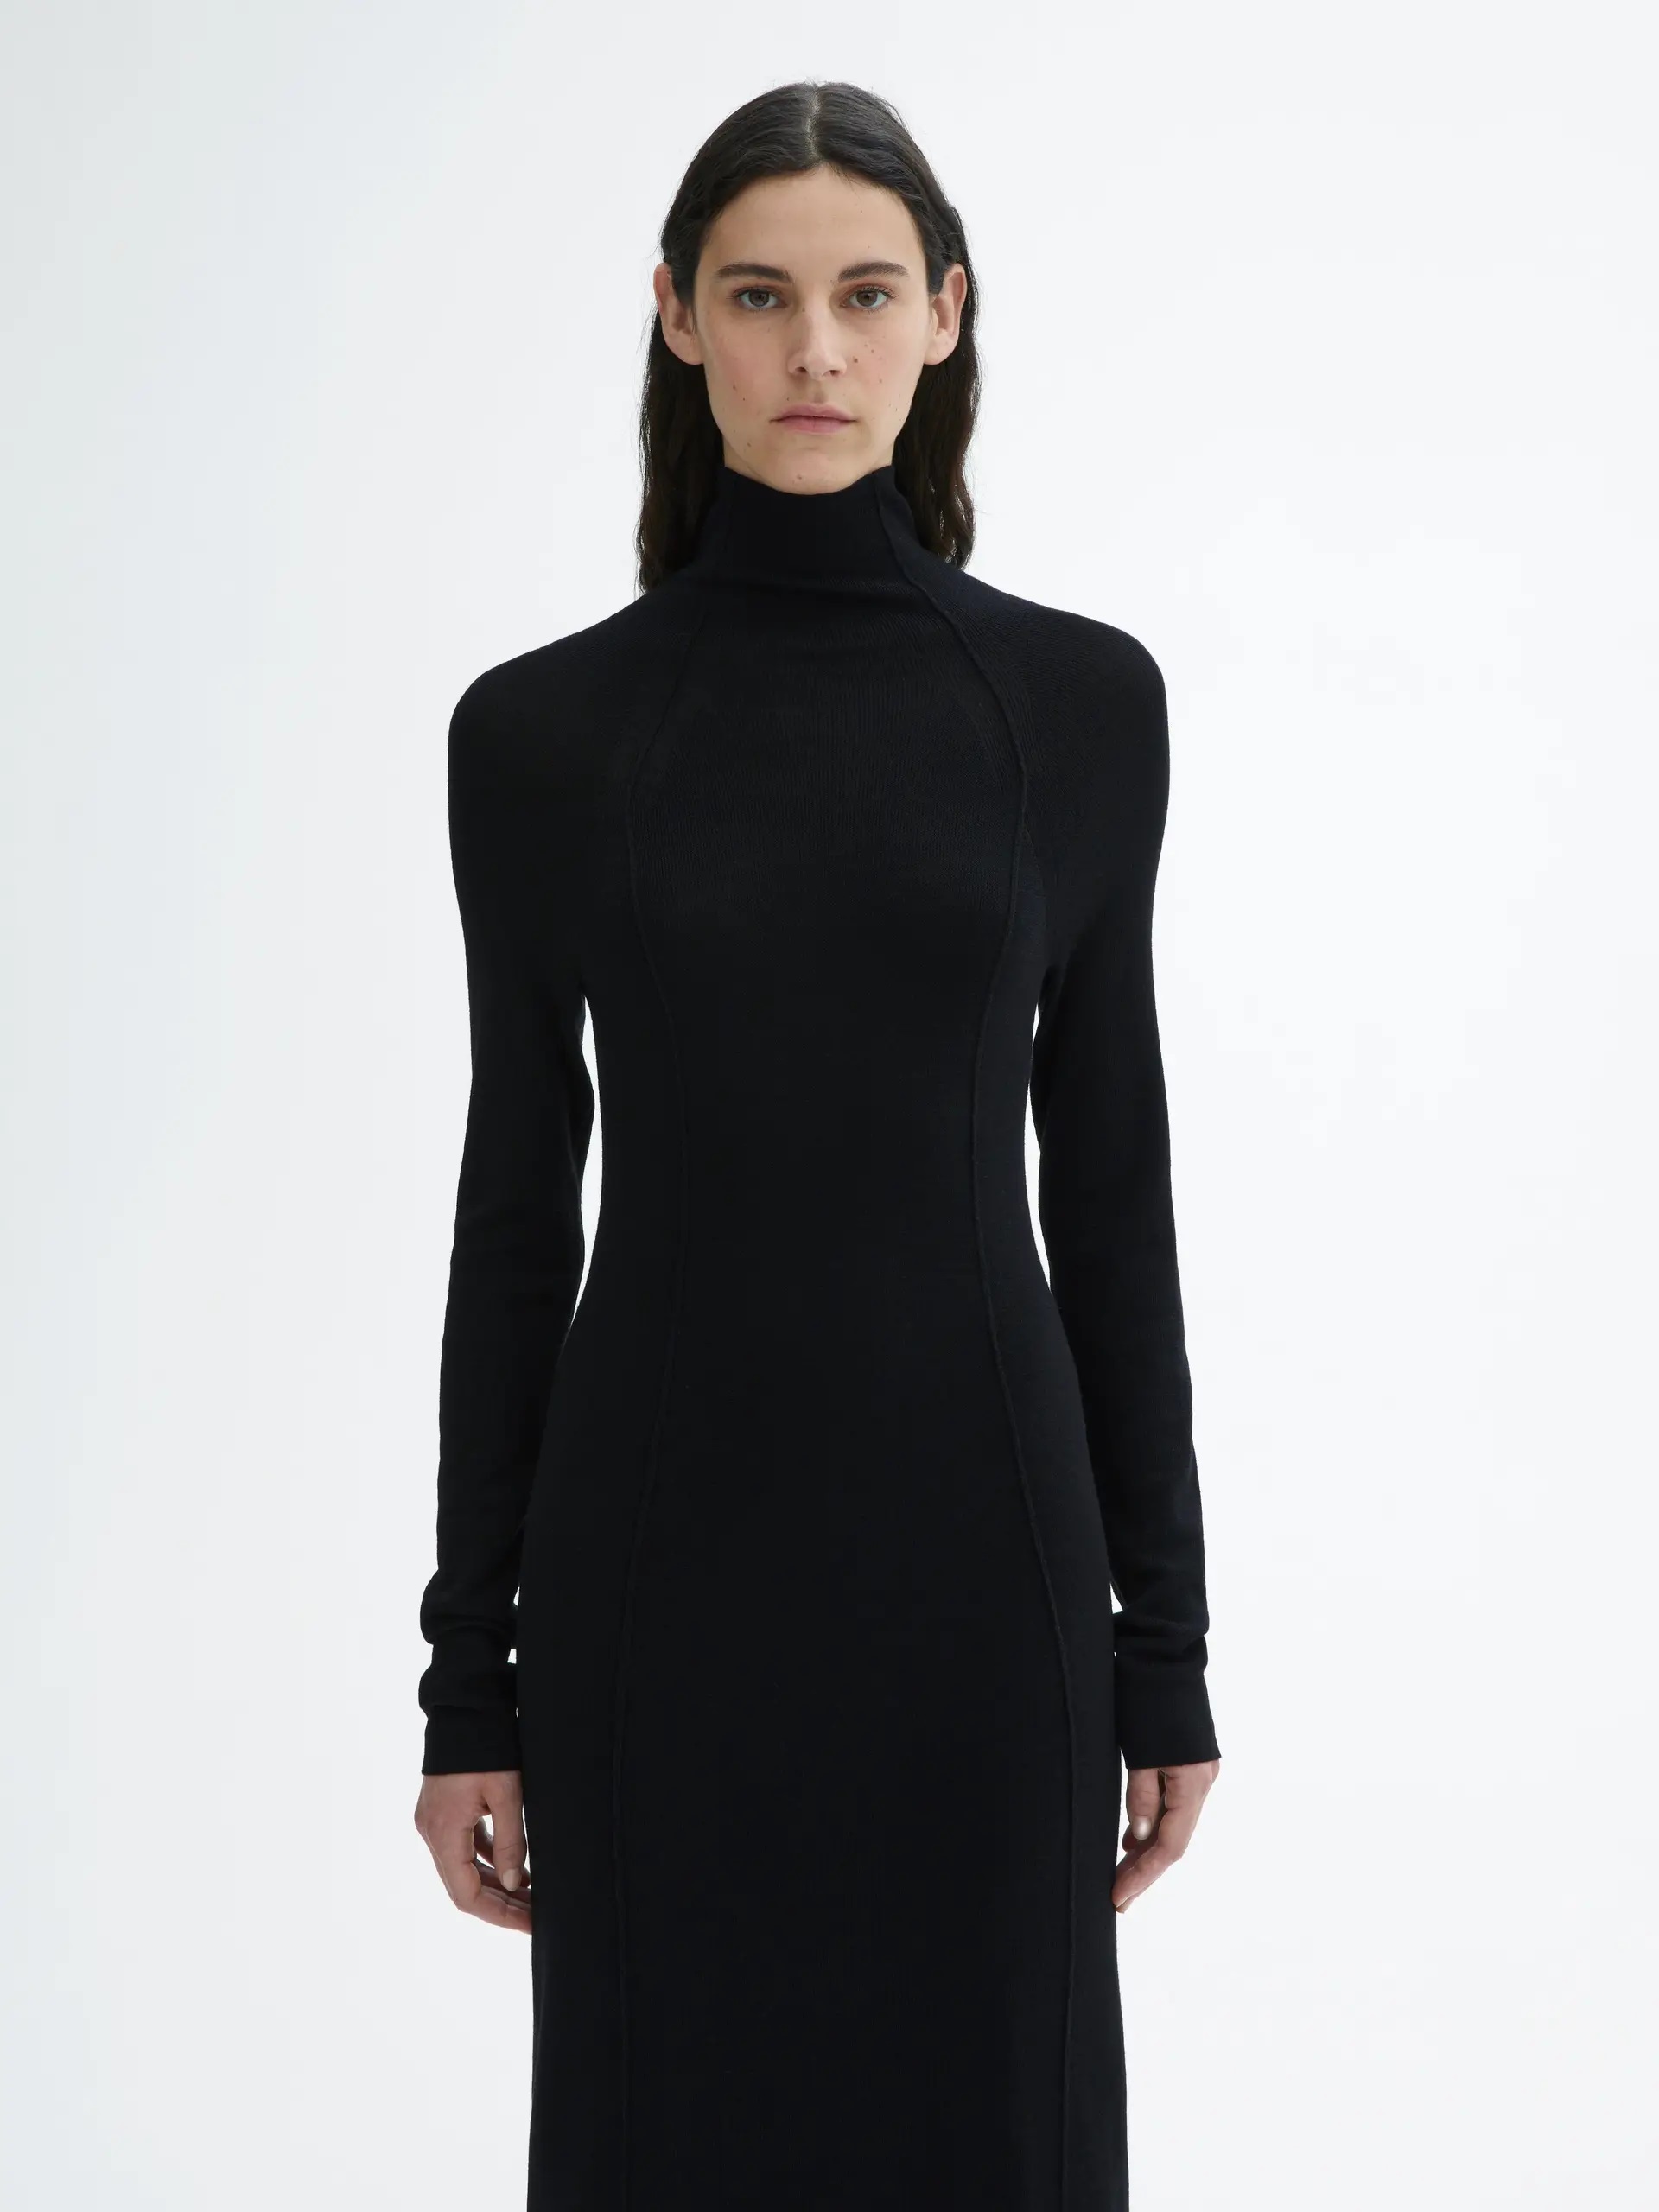 DAGMAR Merino Turtleneck Dress in Black M